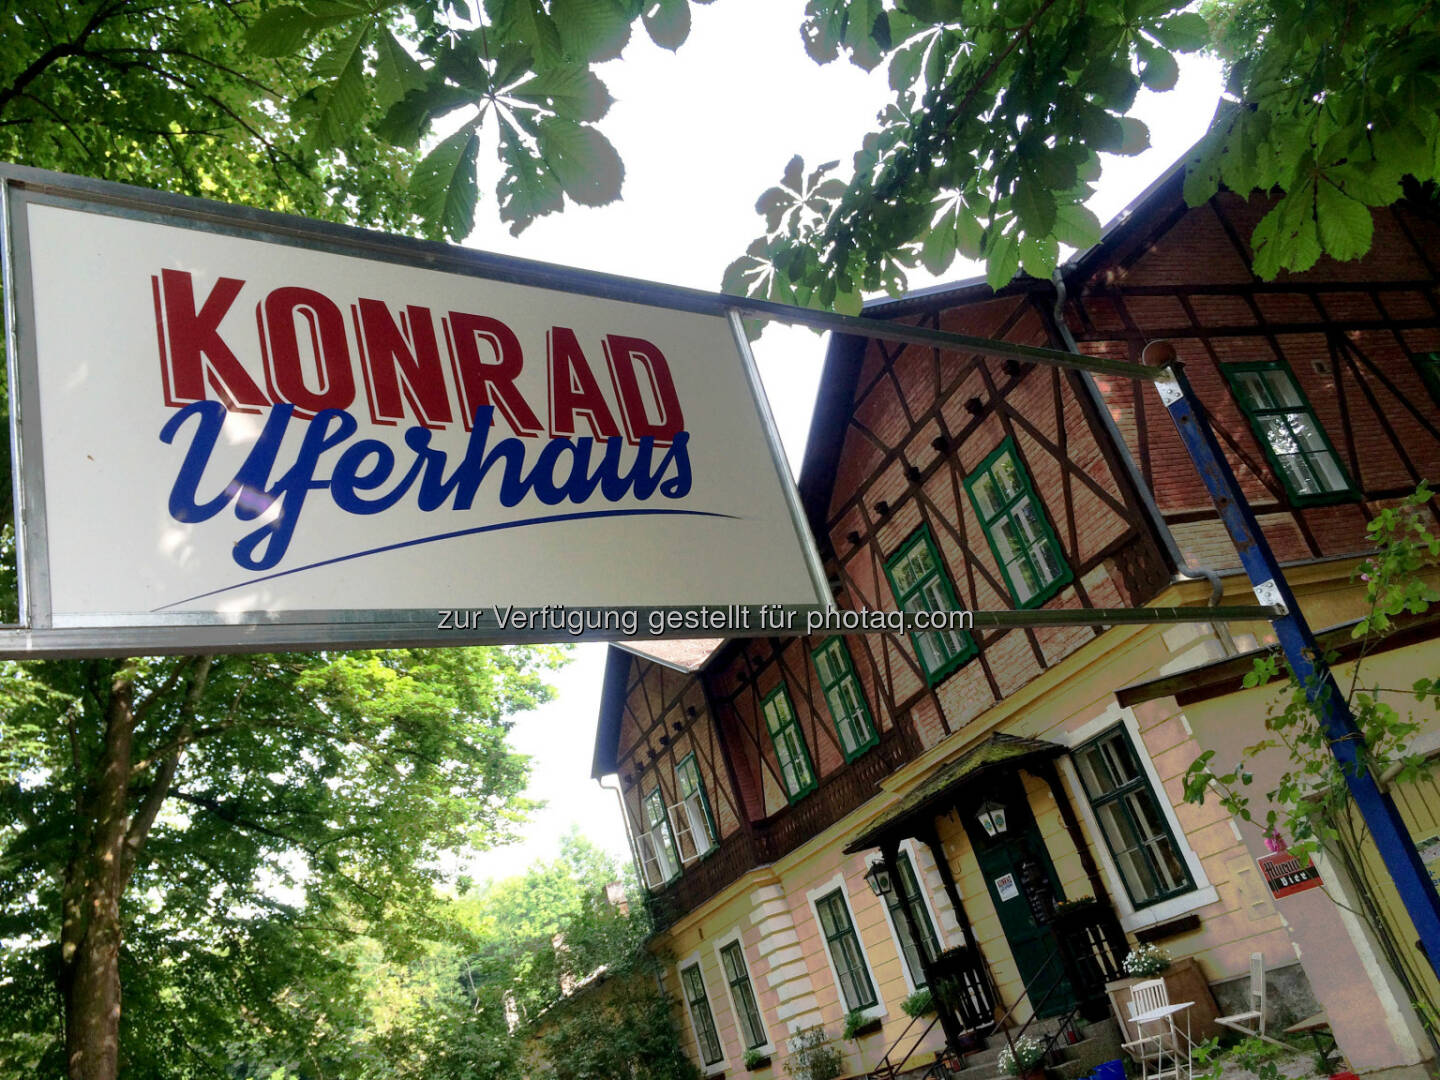 Konrad Uferhaus